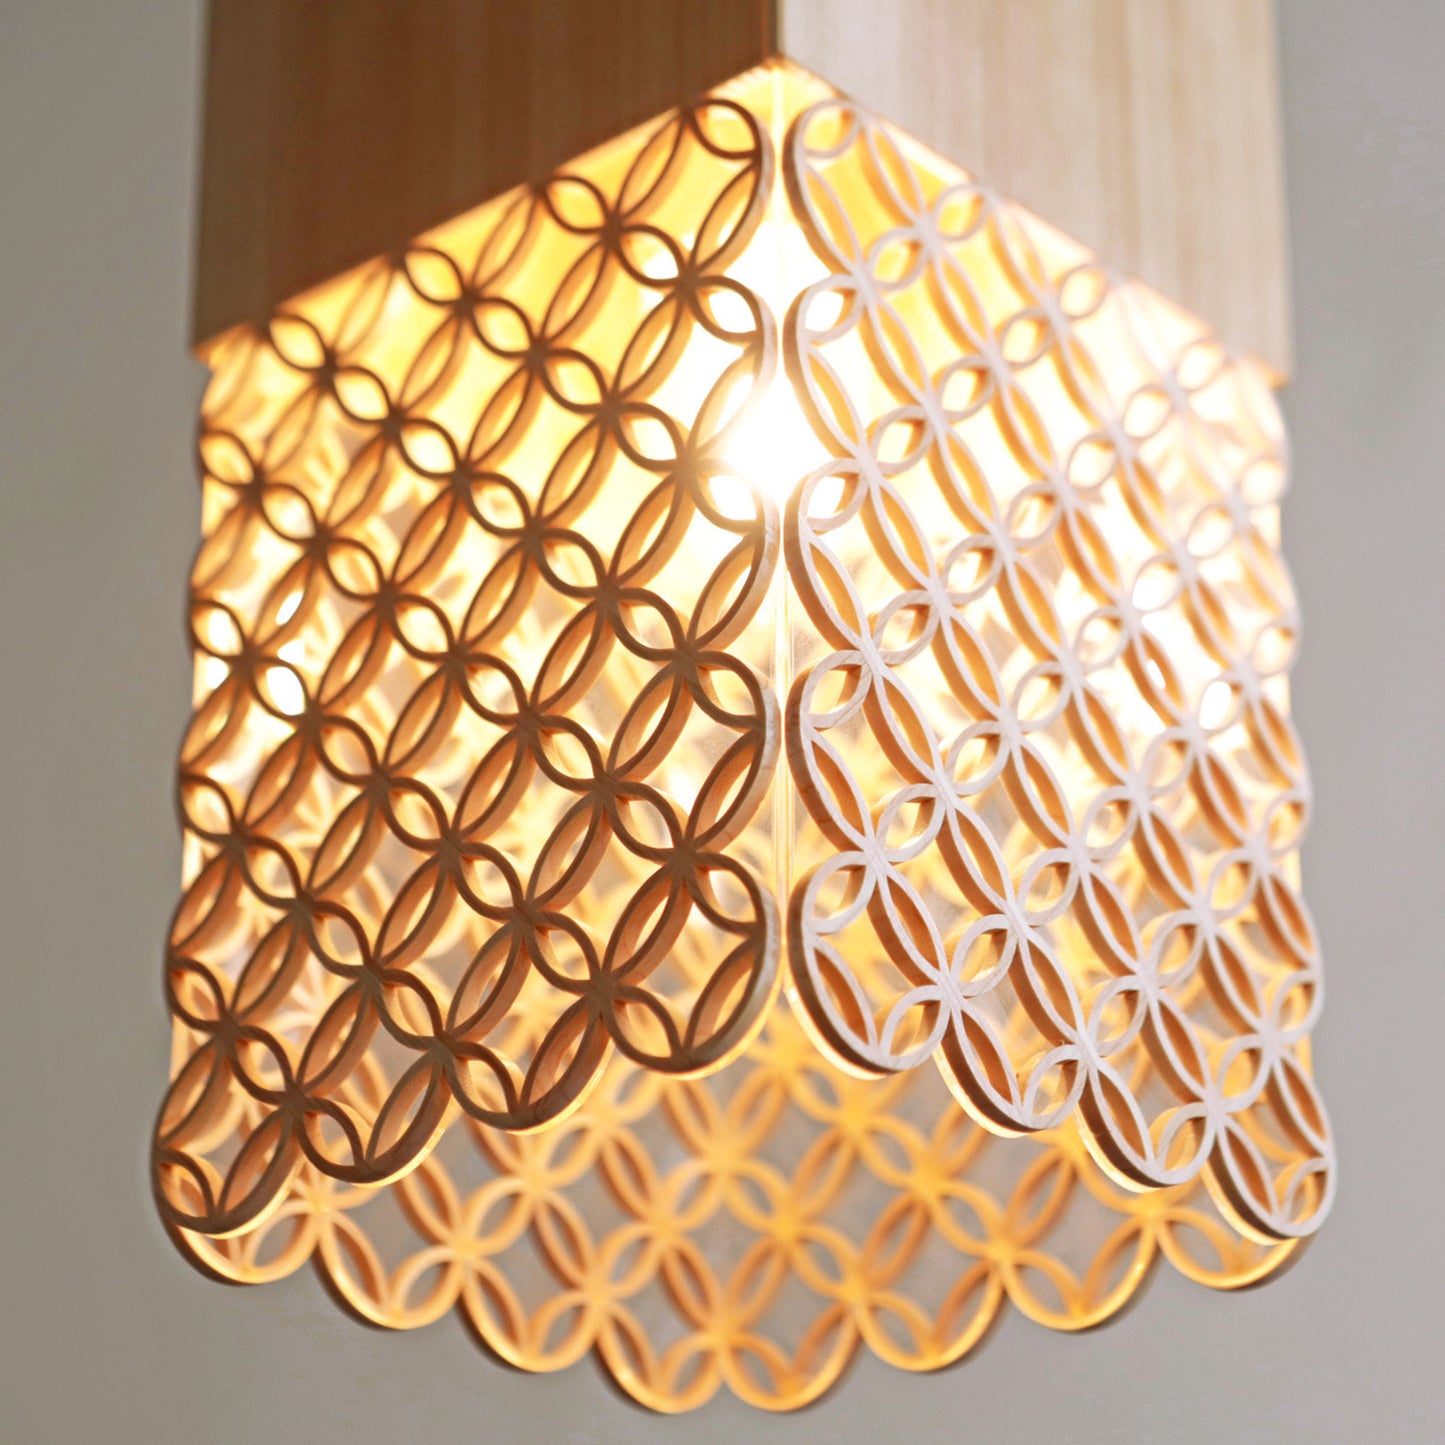 Hanakumiko pendant light lampshade (5 rows)